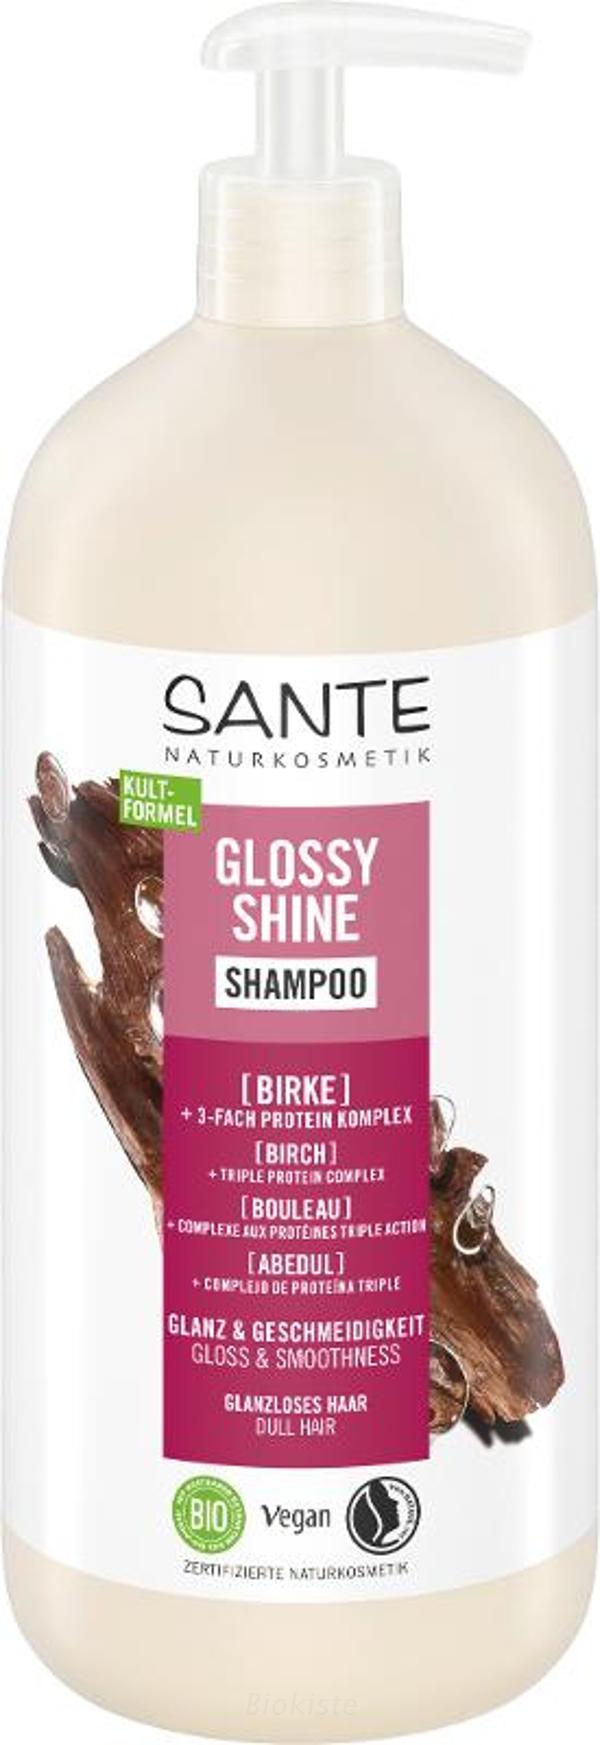 Produktfoto zu Family Glossy Shine Shampoo Birke 950 ml